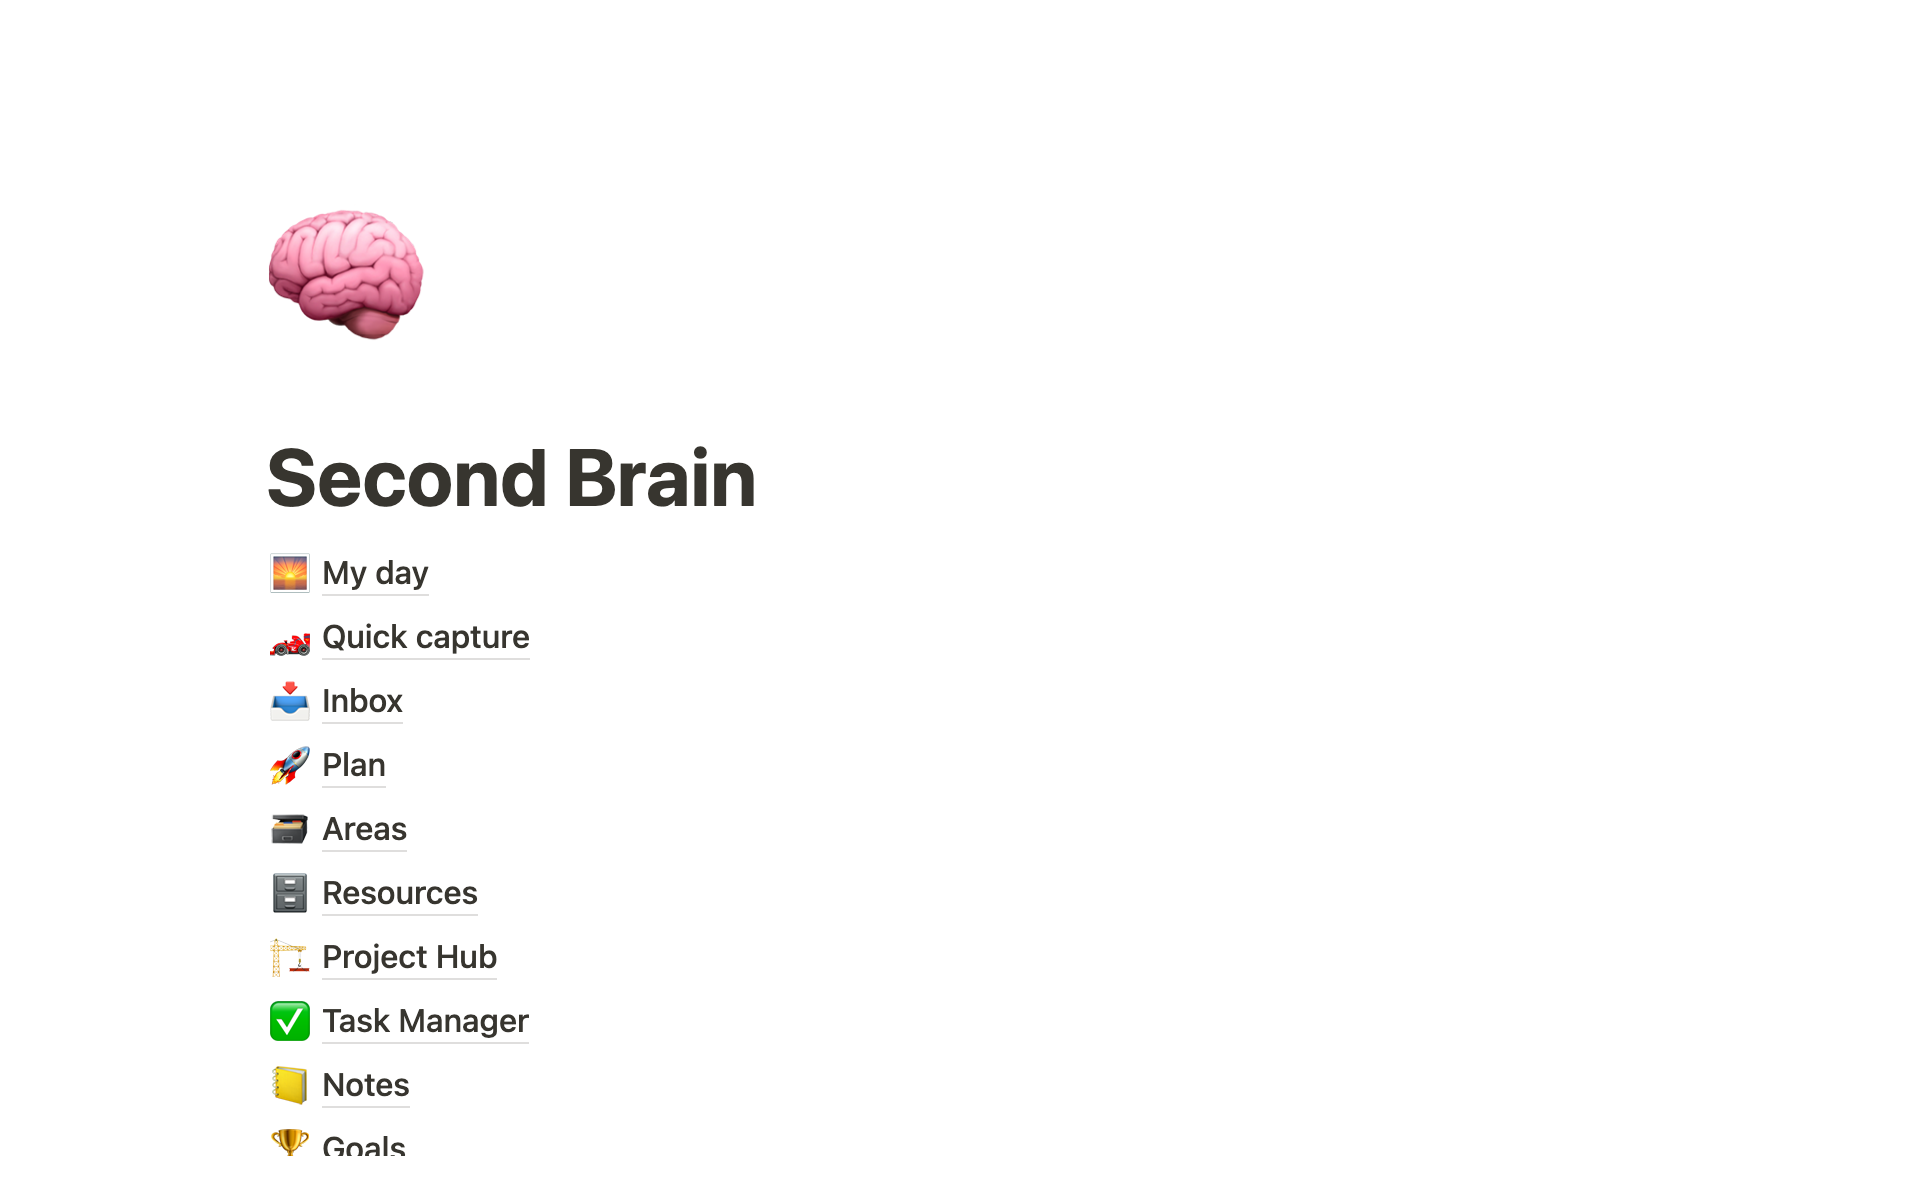 Aperçu du modèle de Second Brain